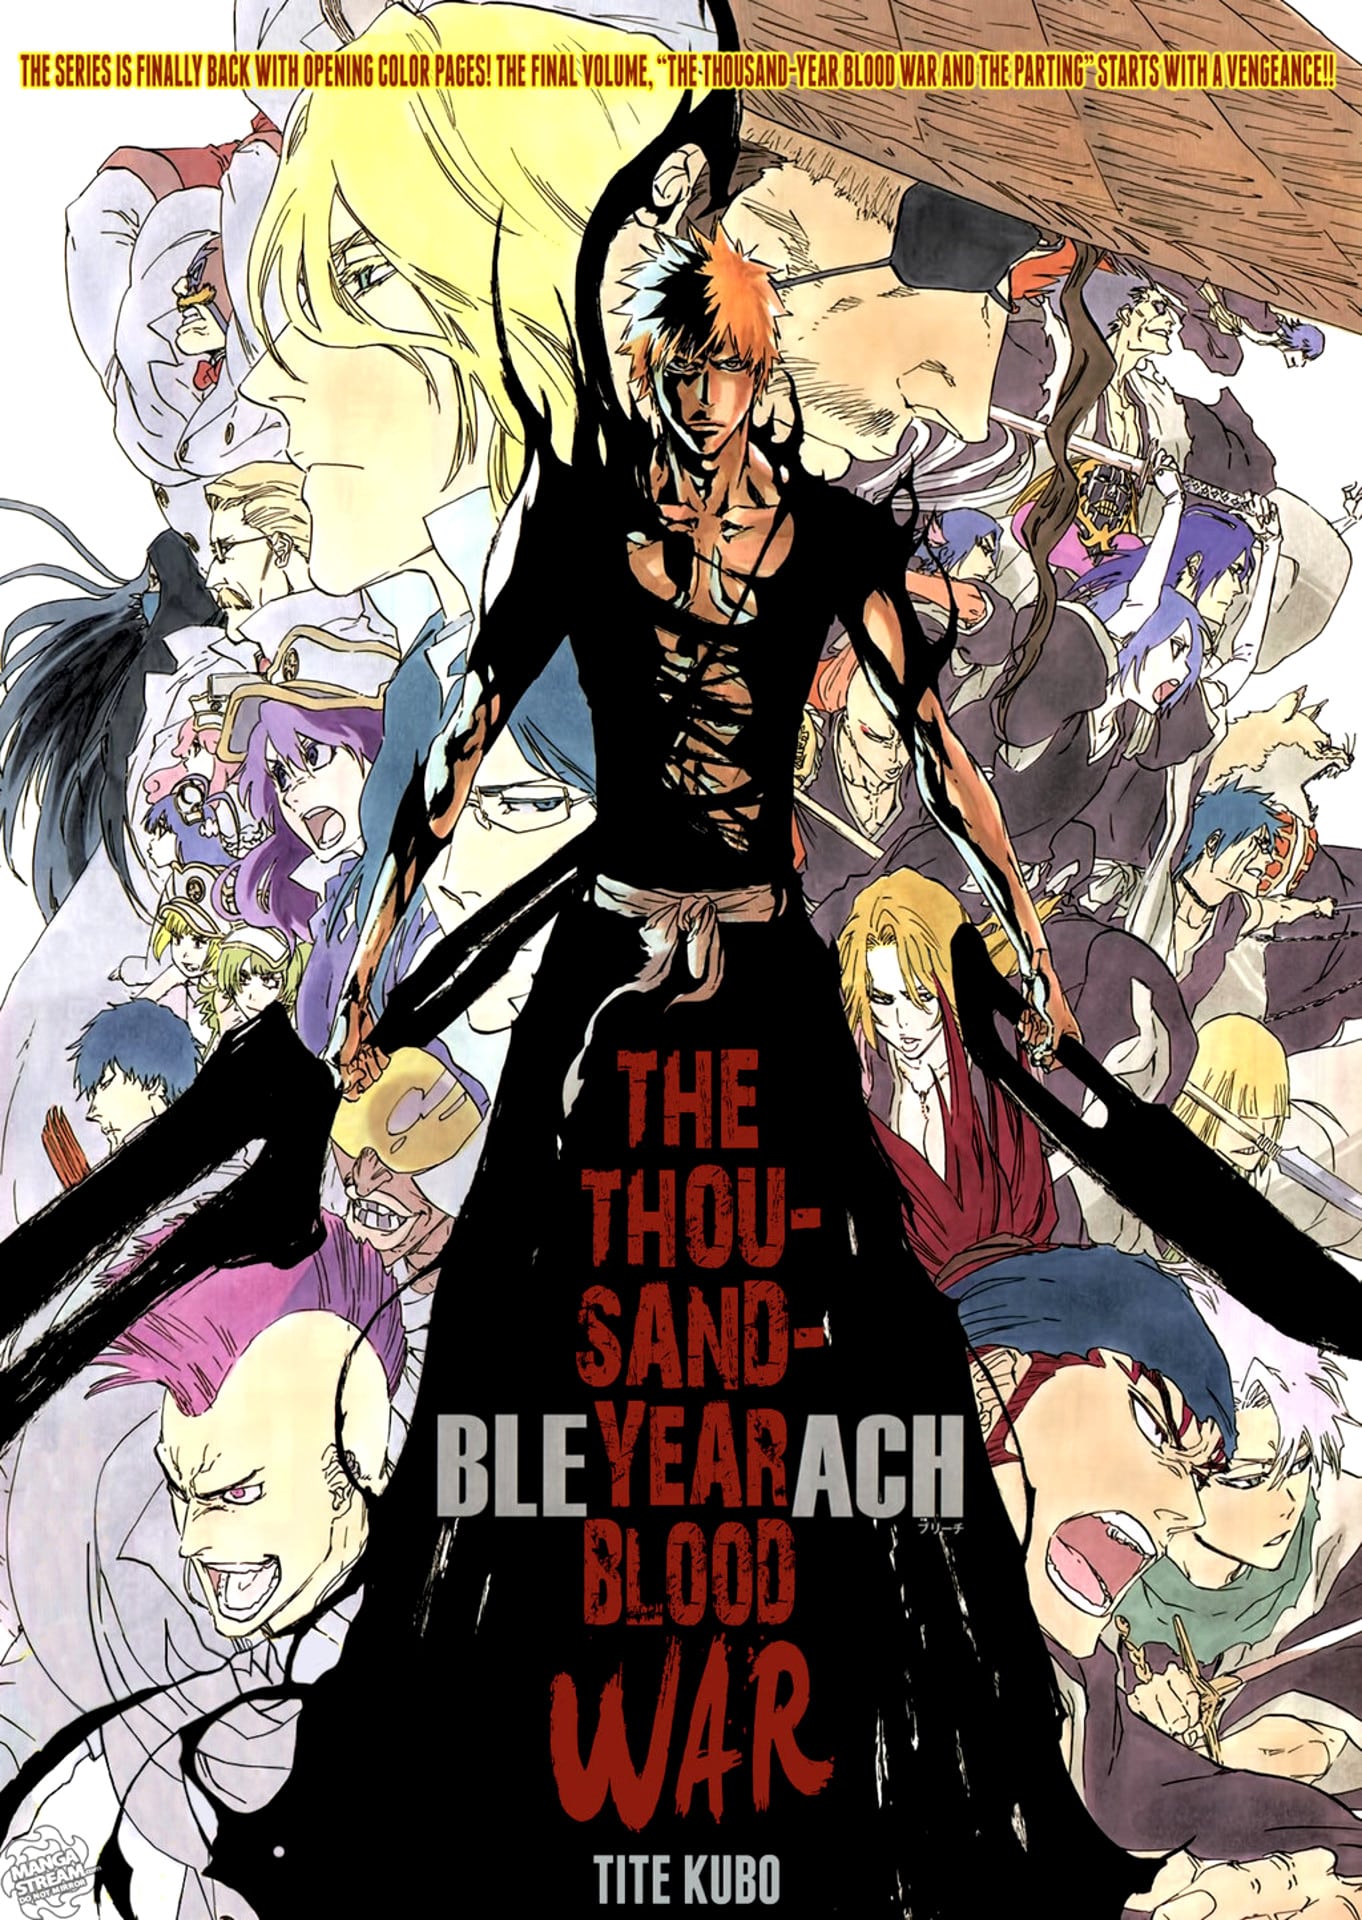 L'arc Thousand-year Blood War de l'anime Bleach arrive en anime !